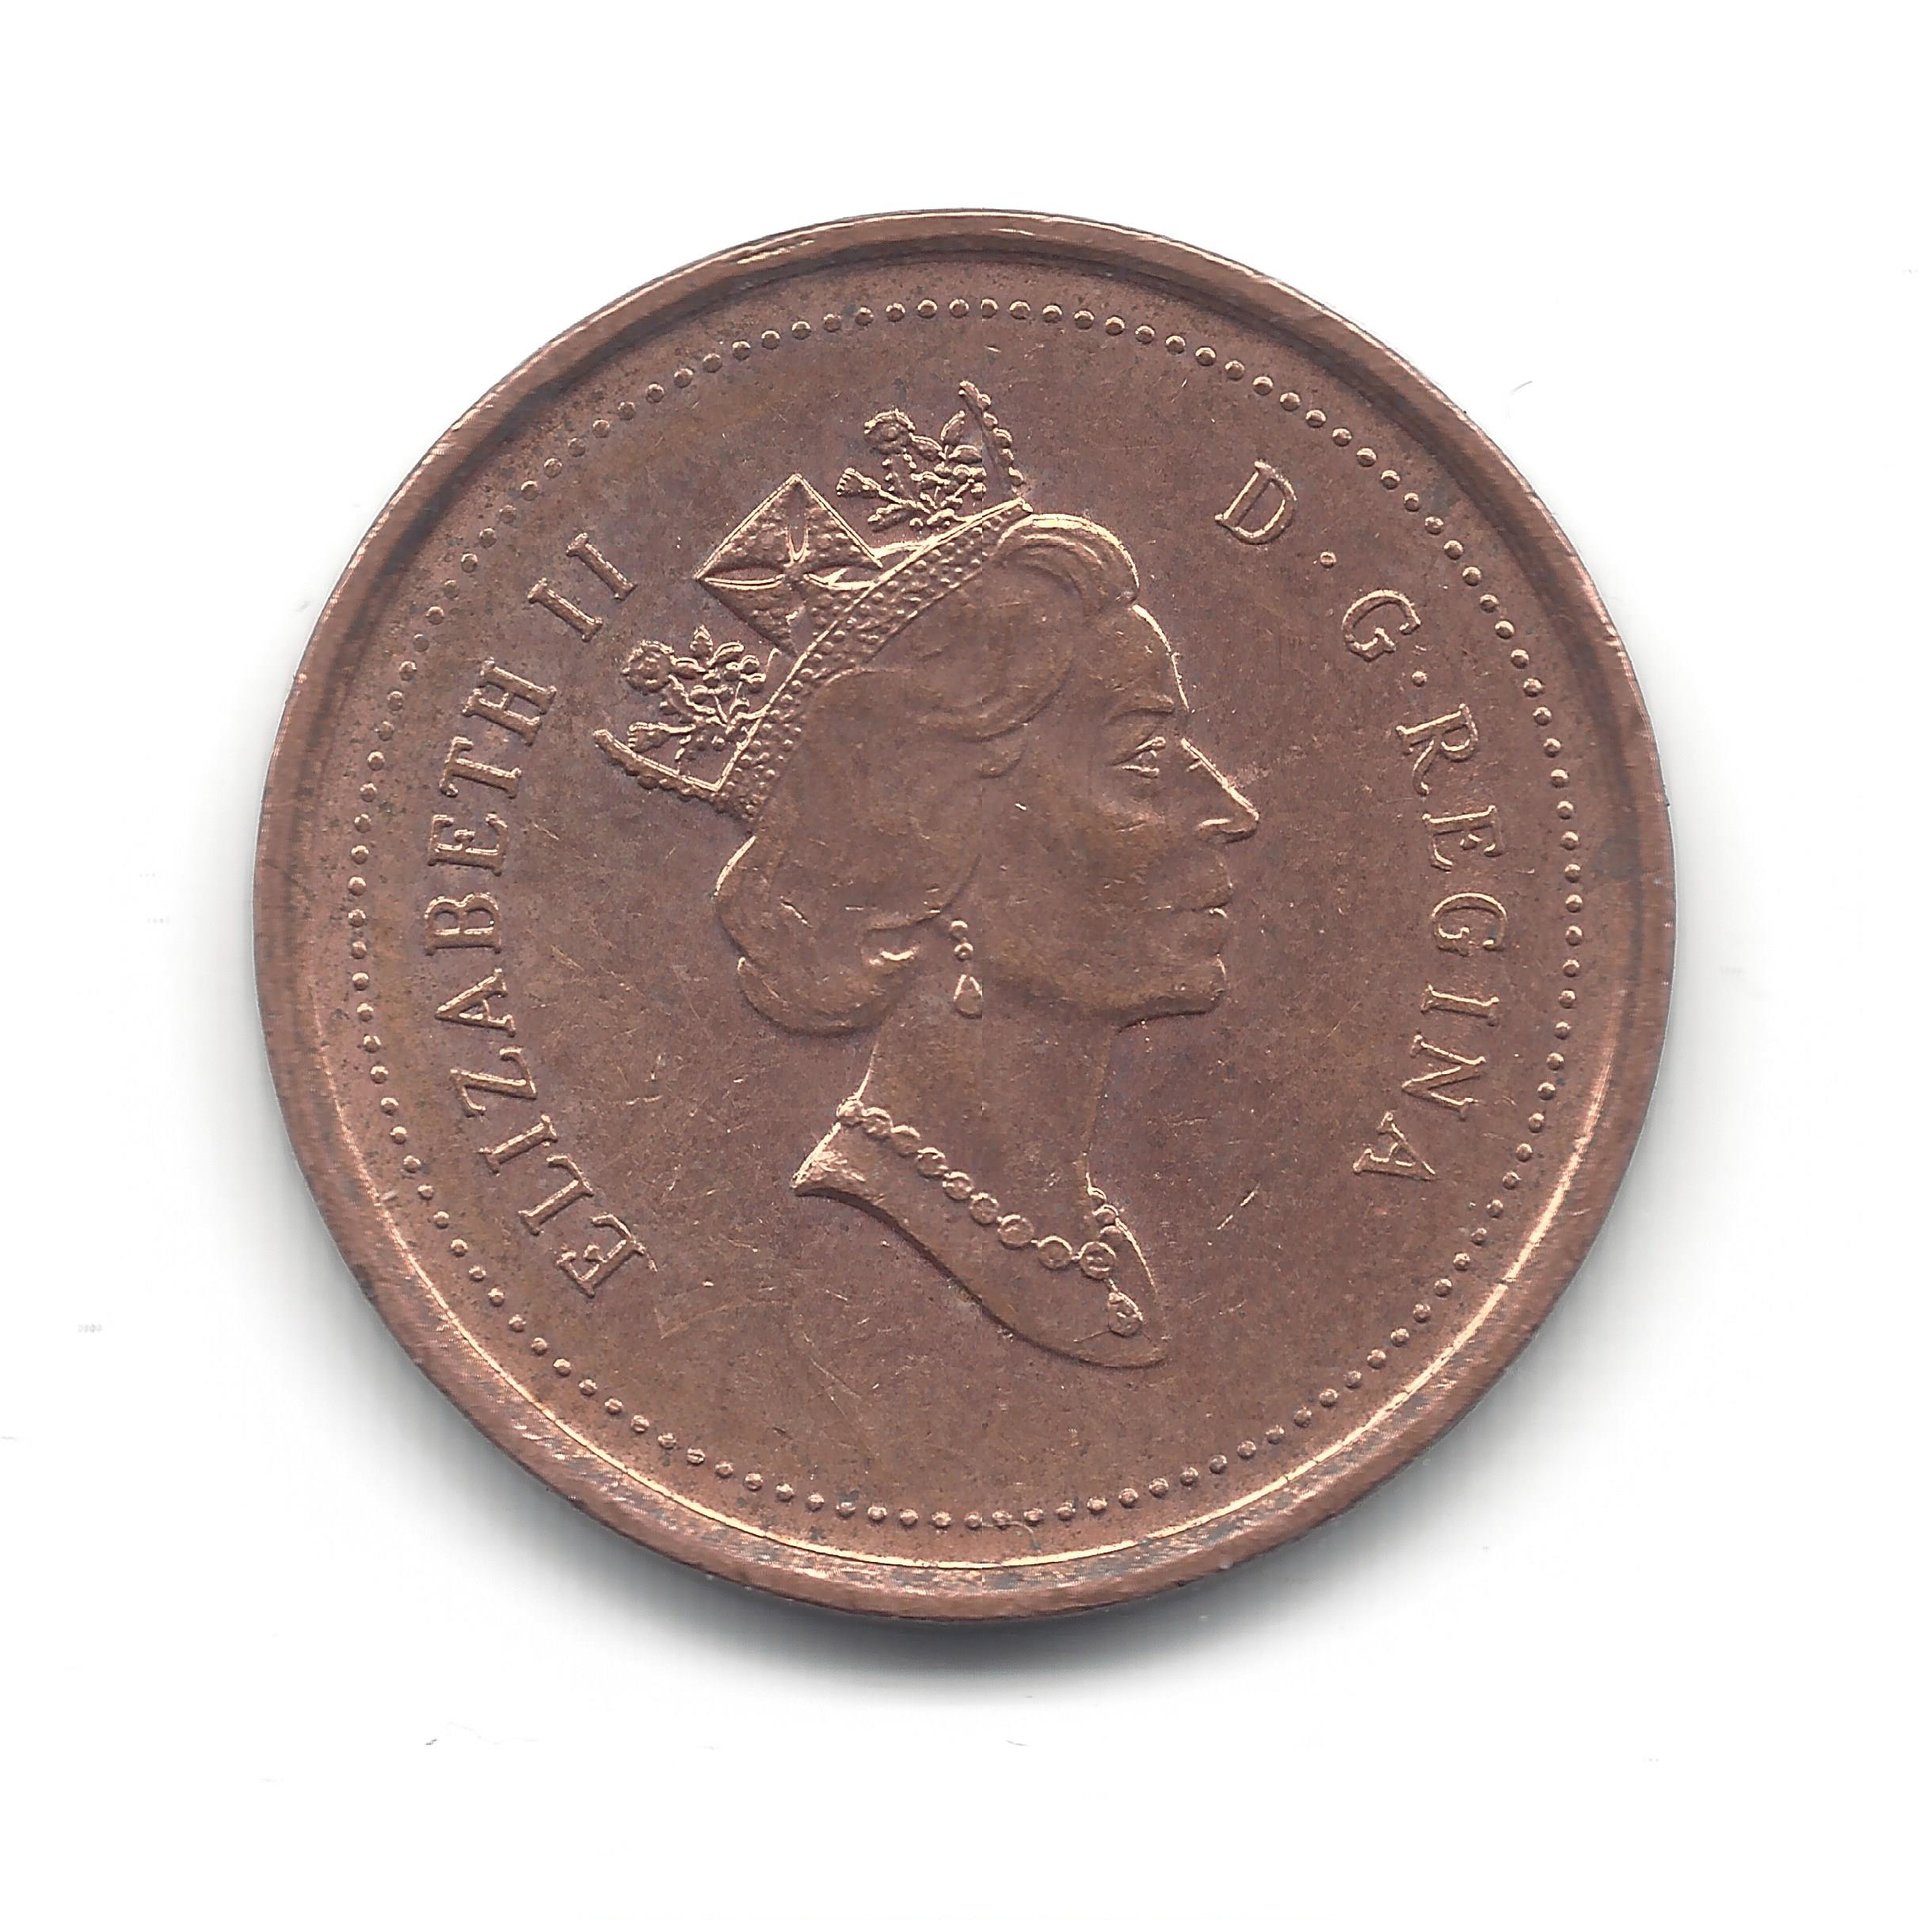 1999 canaddian penny.jpg